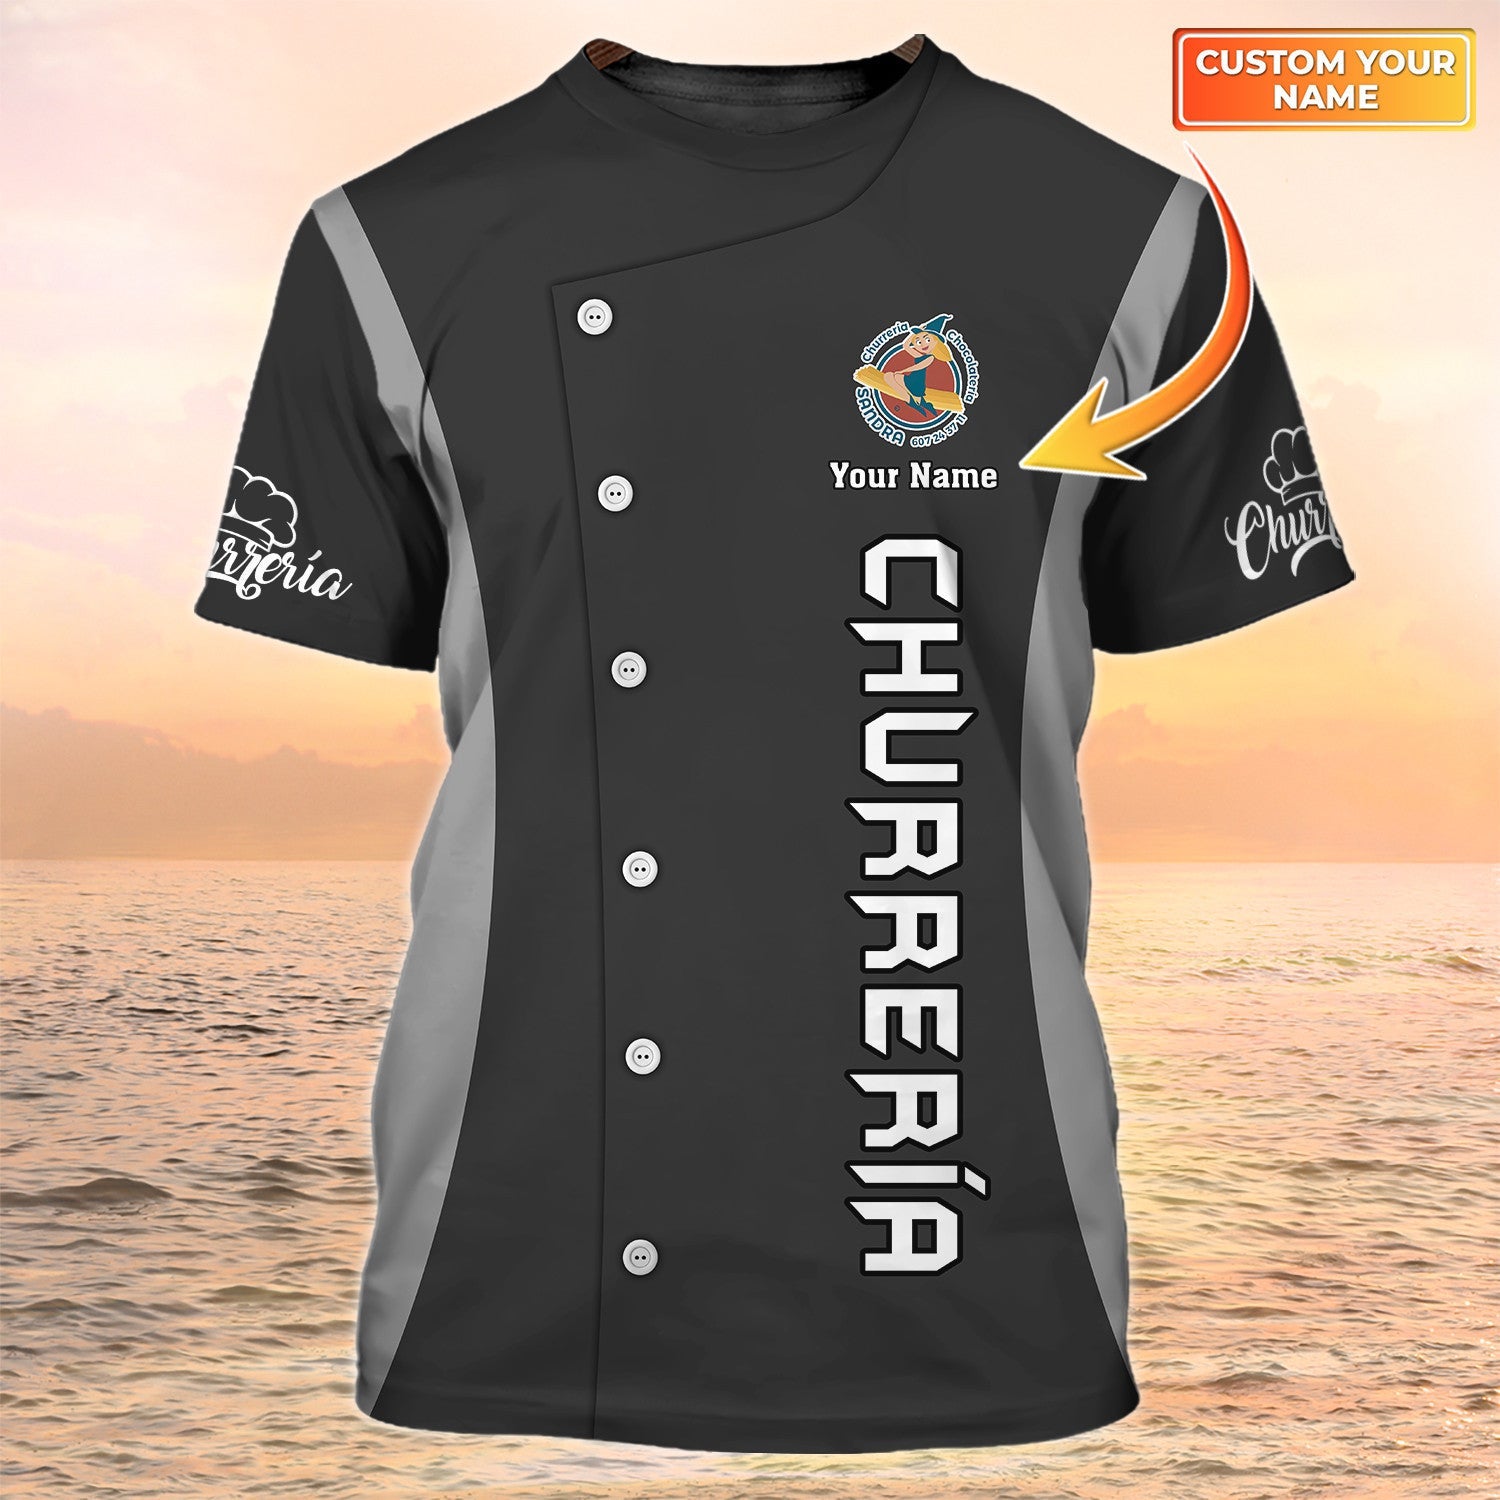 Churreria Tshirt Churros 3D Custom Shirt Black Uniform